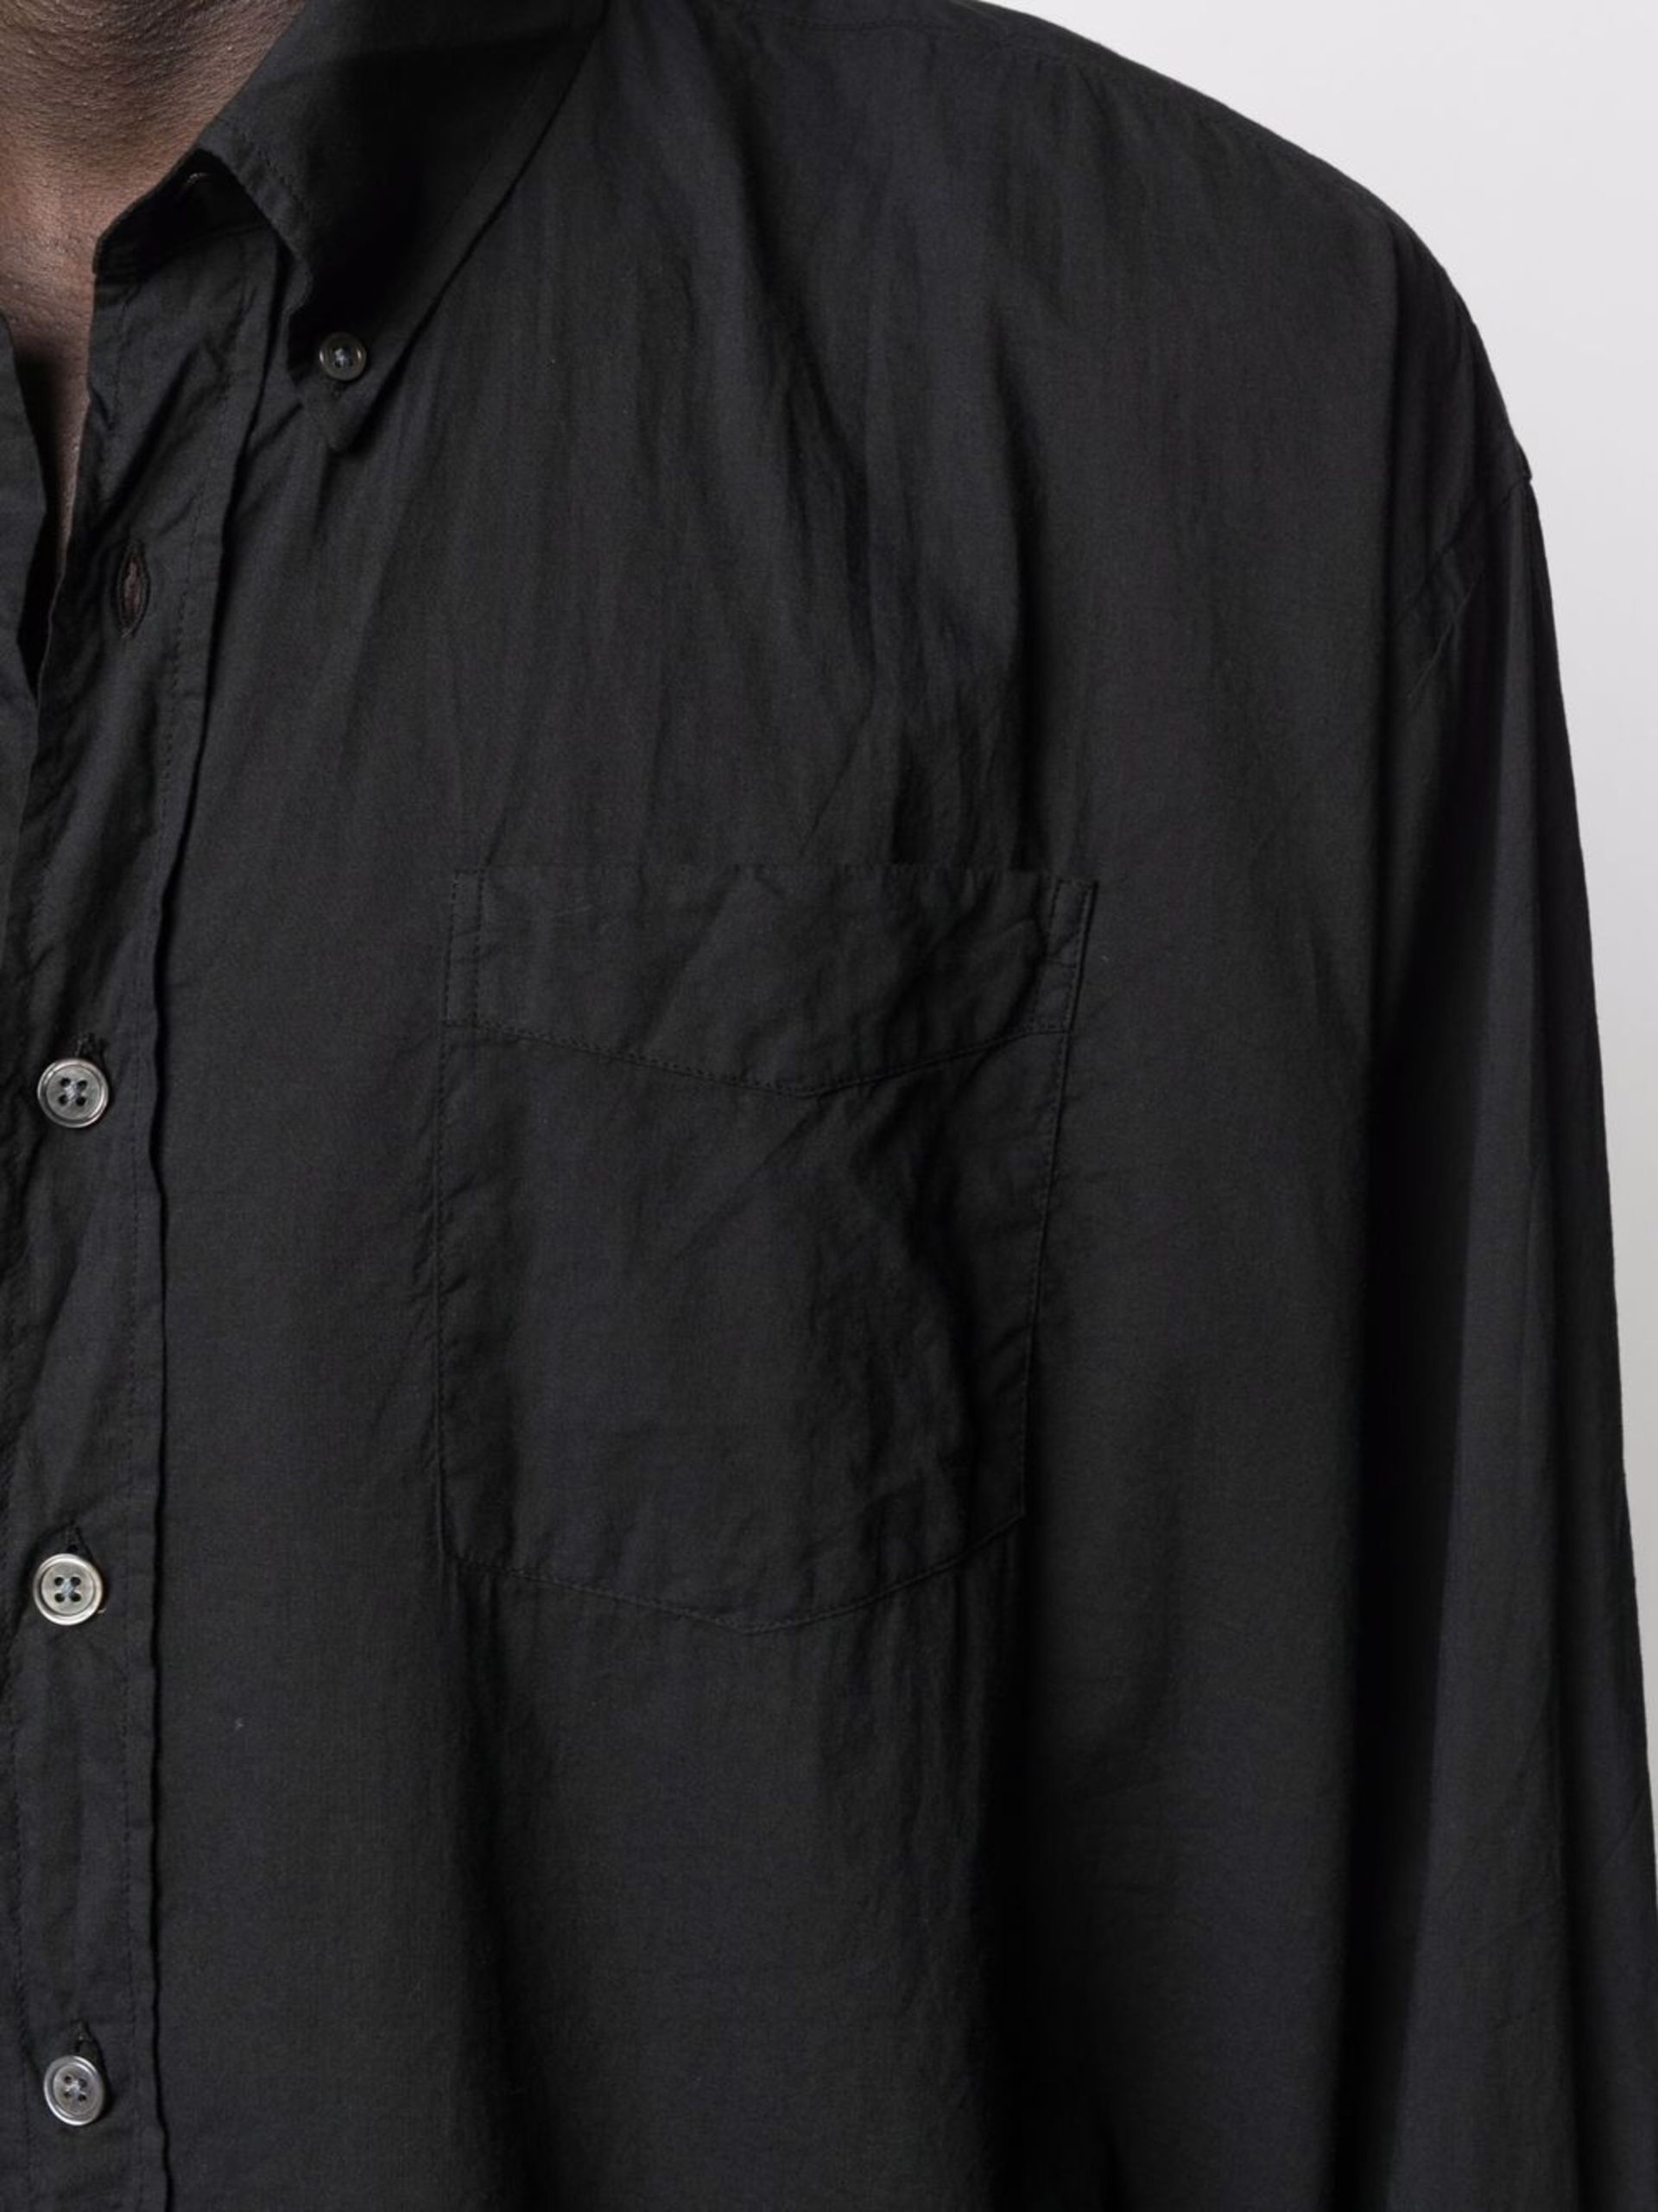 black Borrowed cotton shirt - 5